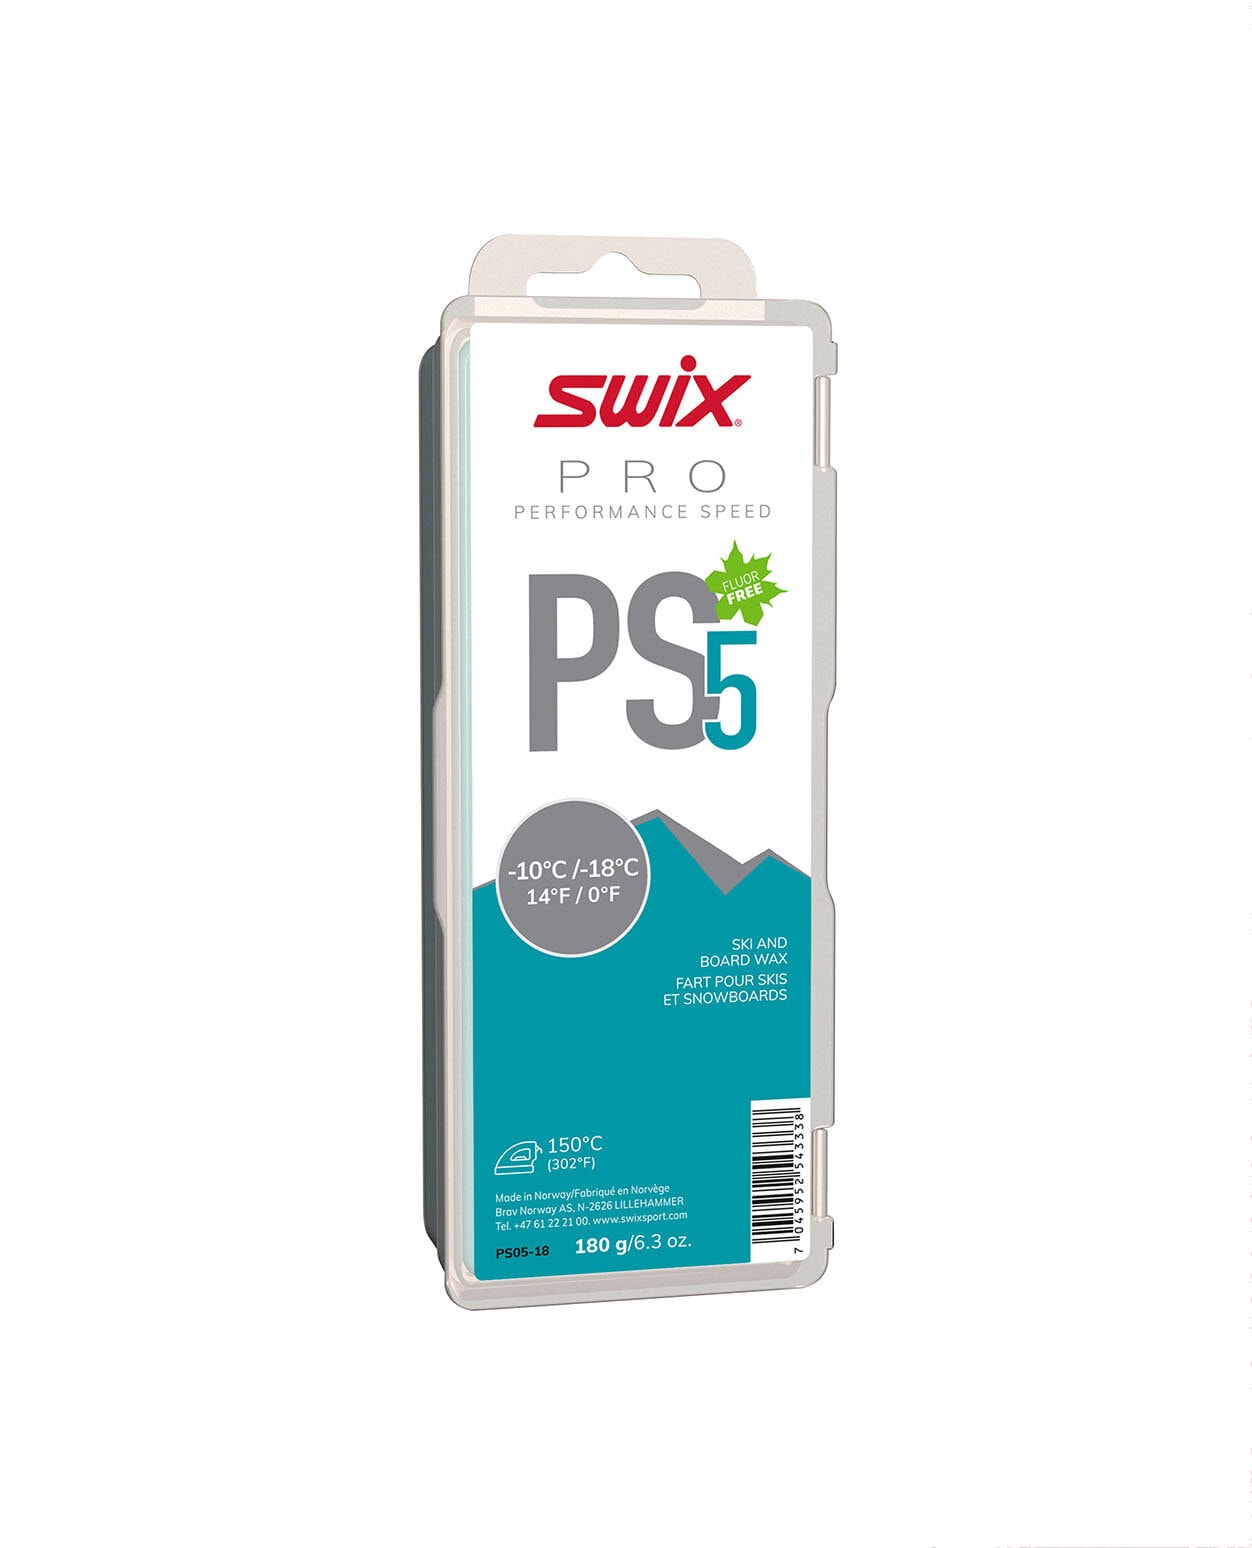 Swix PS5 Turquoise, -10°C/-18°C, 180g